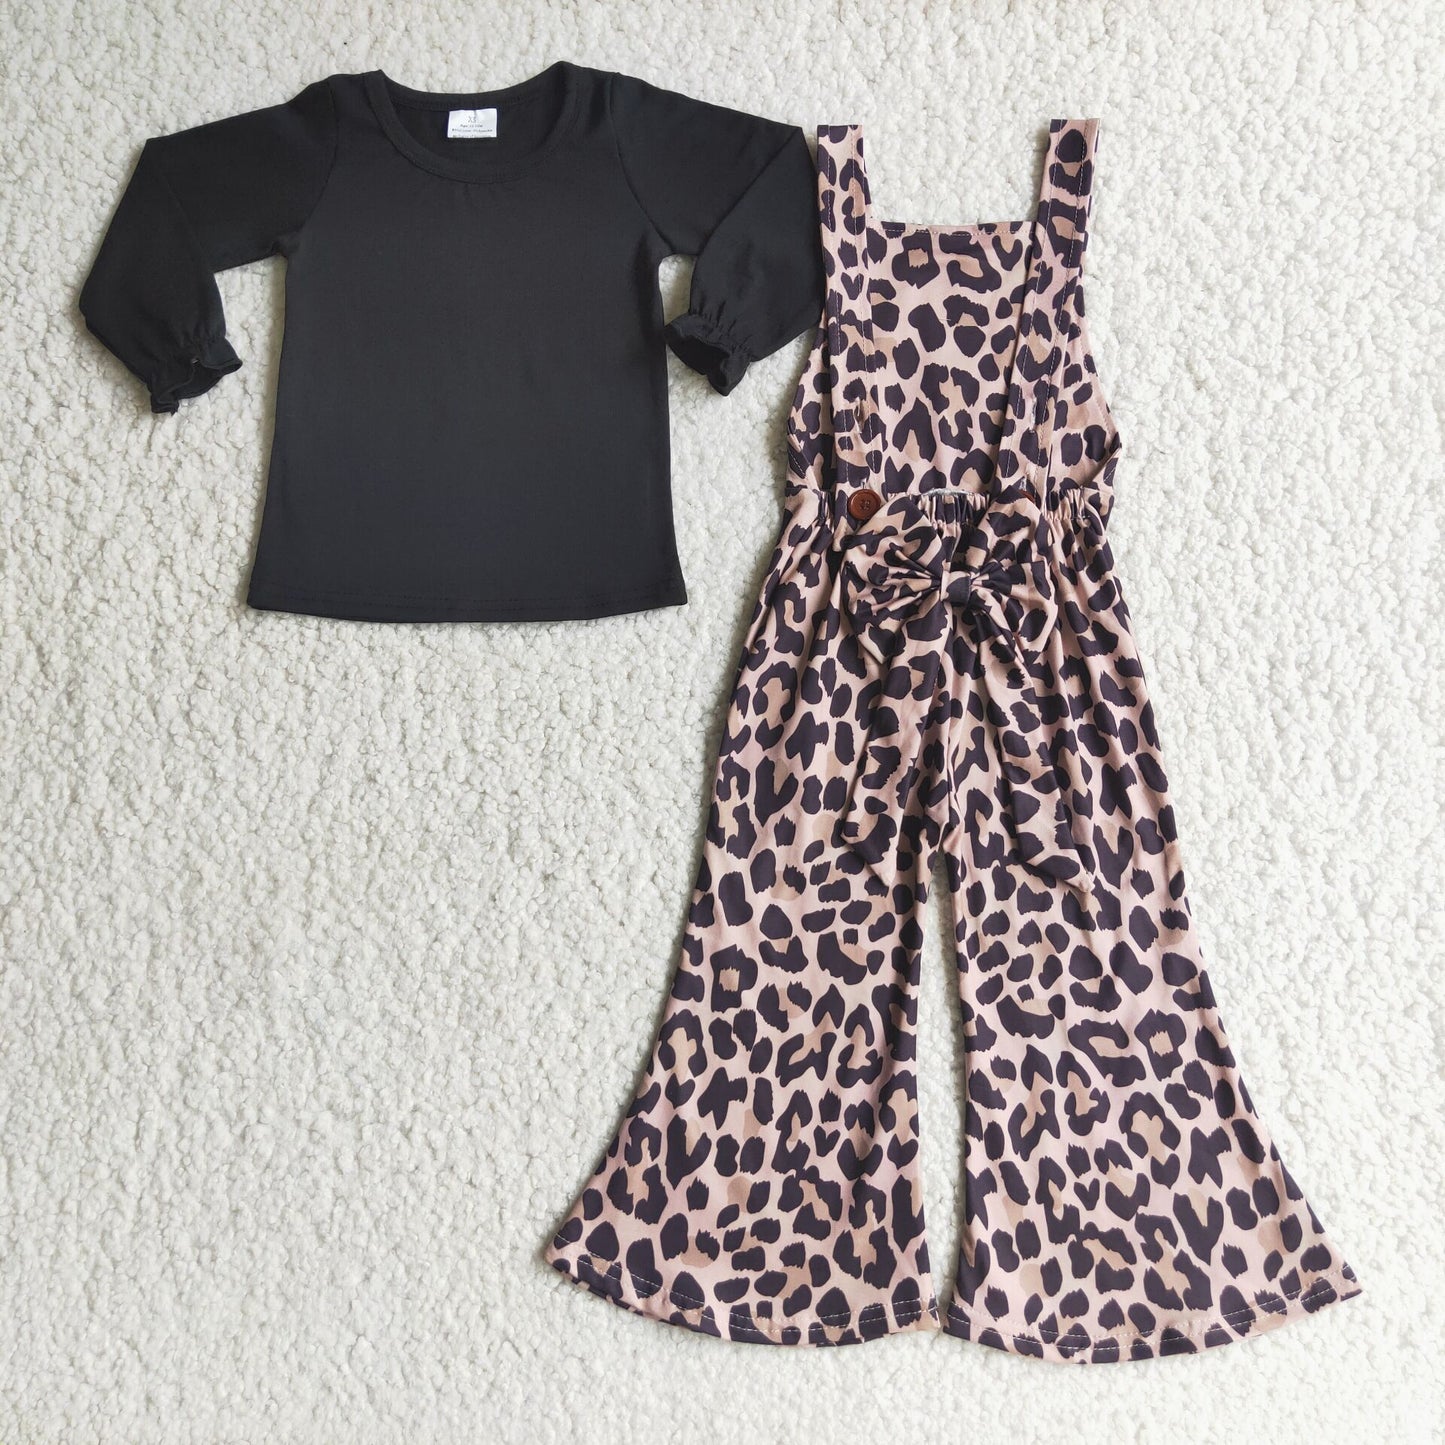 Black cotton shirt leopard print overalls girls clothing